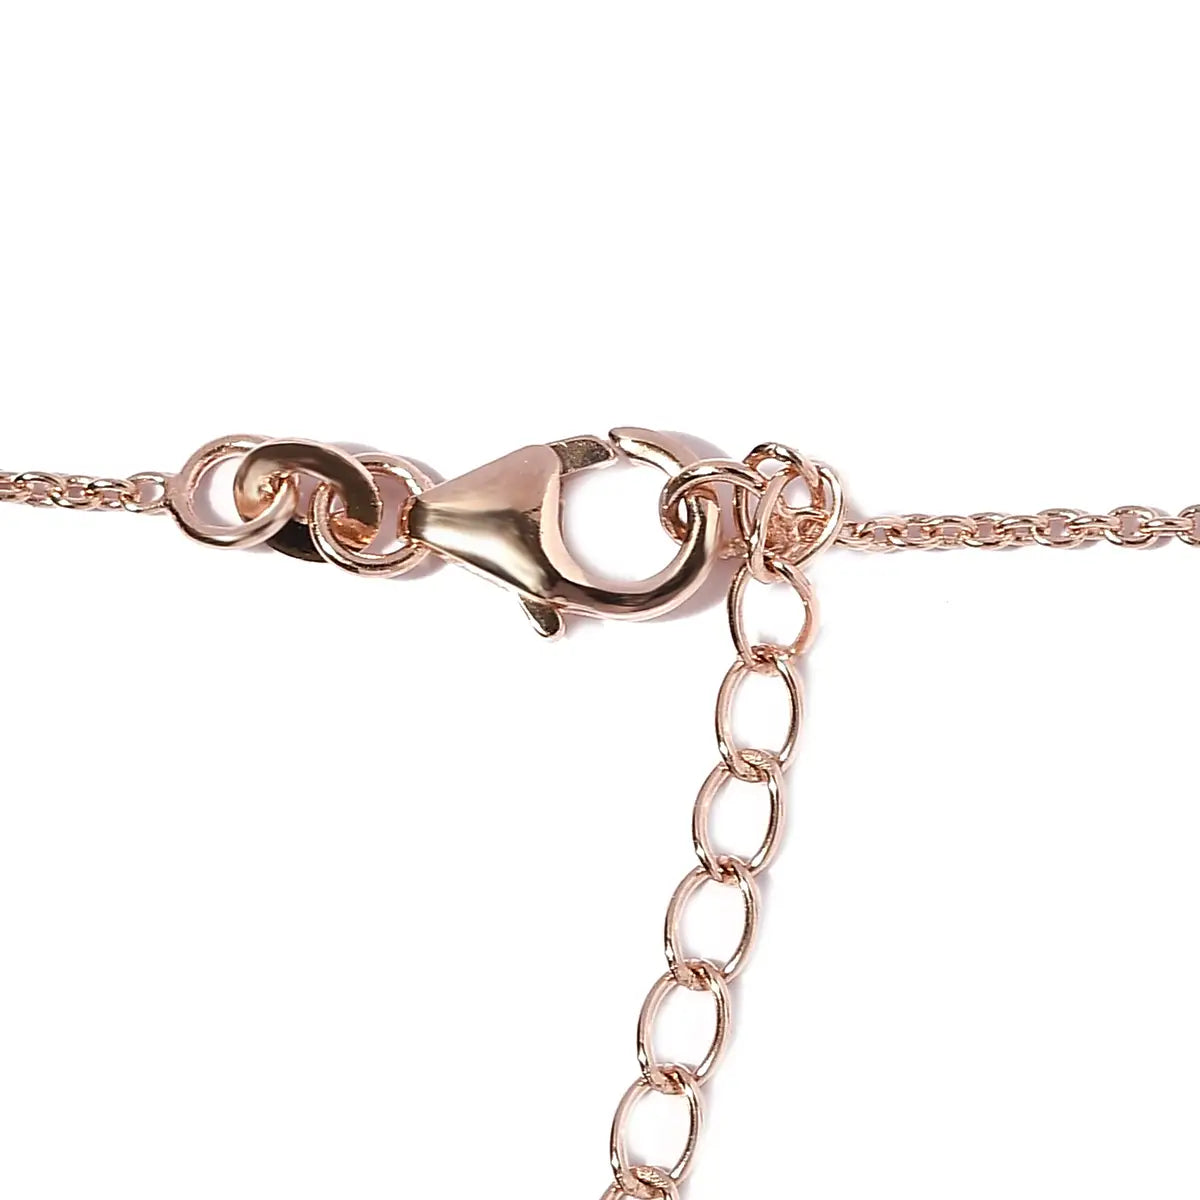 Natural Triangular Amethyst Princess Wedding Statement Necklace For Women - 14k Rose Gold Vermeil Necklace